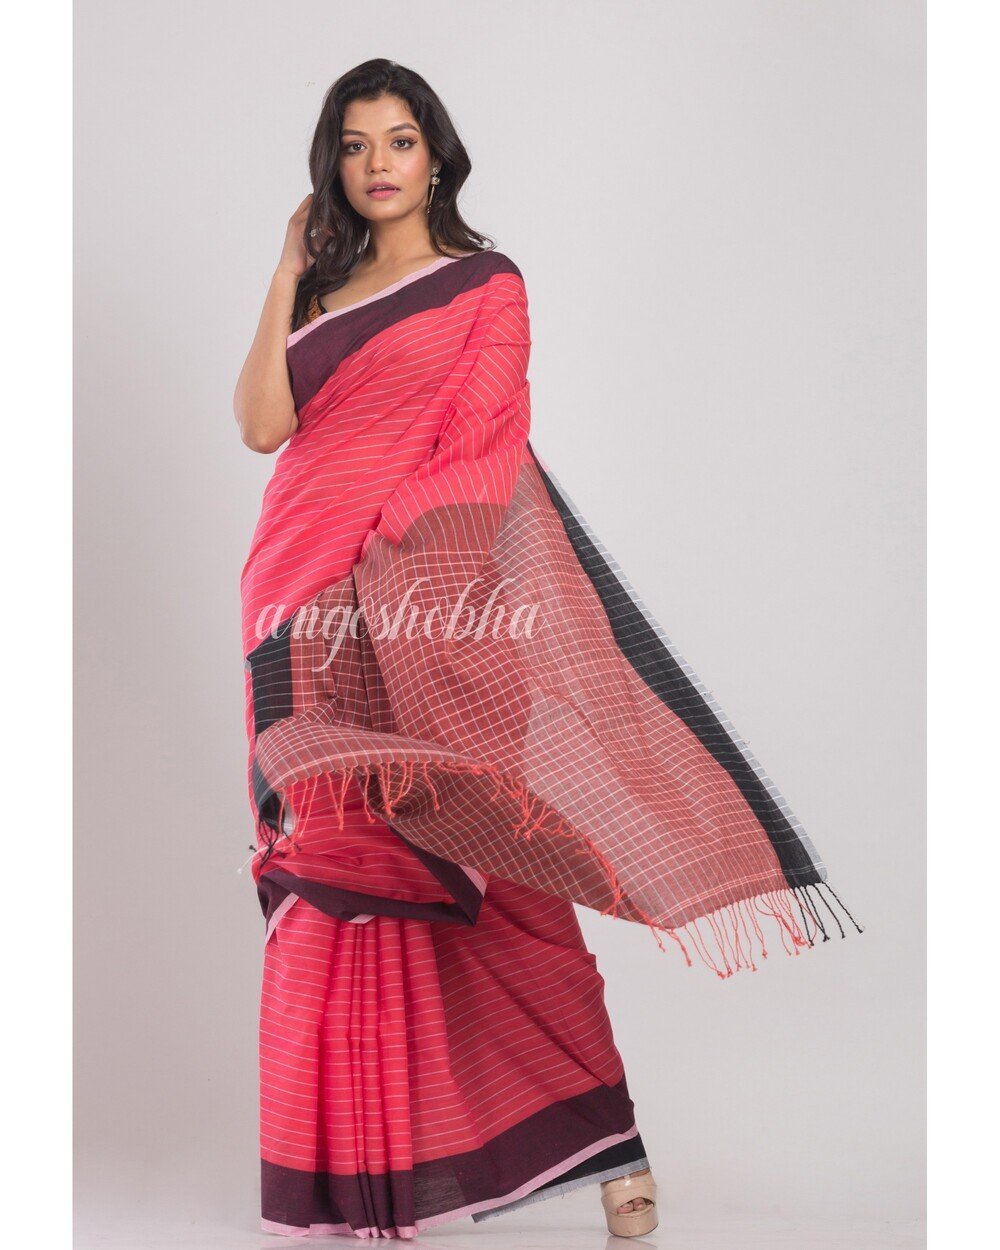 Women's Dark Pink Handwoven Cotton Saree - Angoshobha